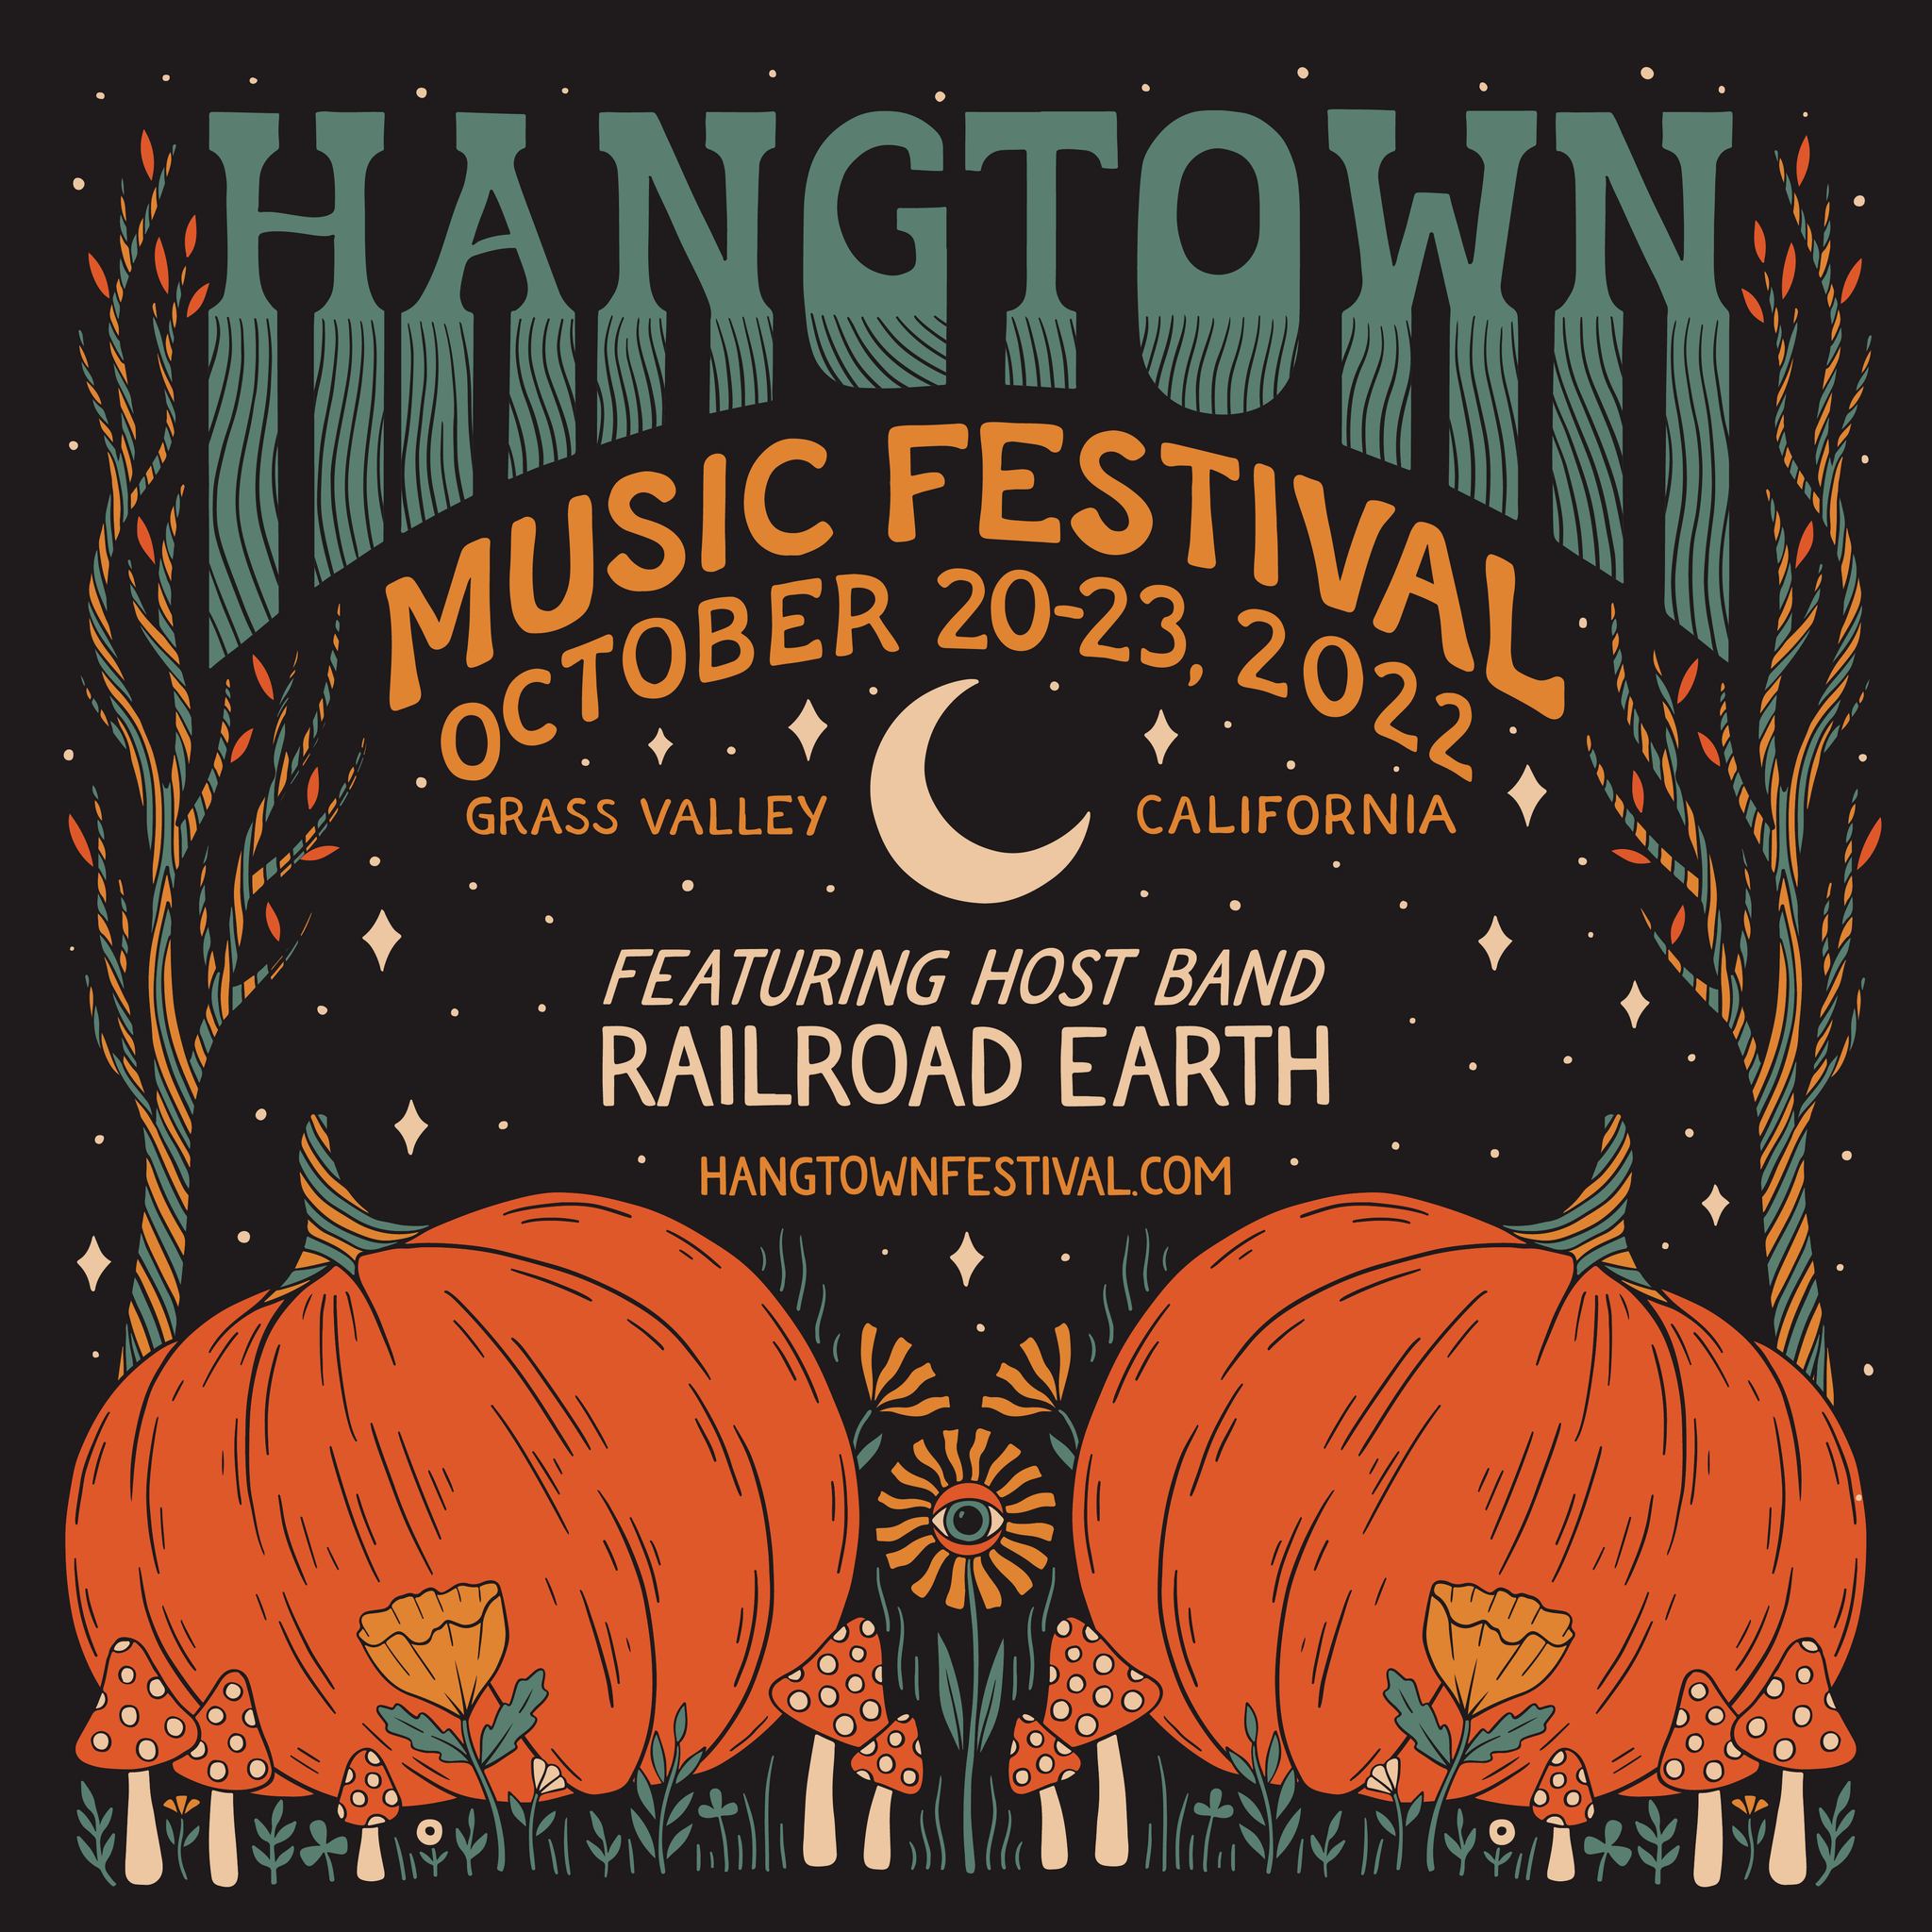 HANGTOWN MUSIC FESTIVAL 2022 IN GRASS VALLEY, CA